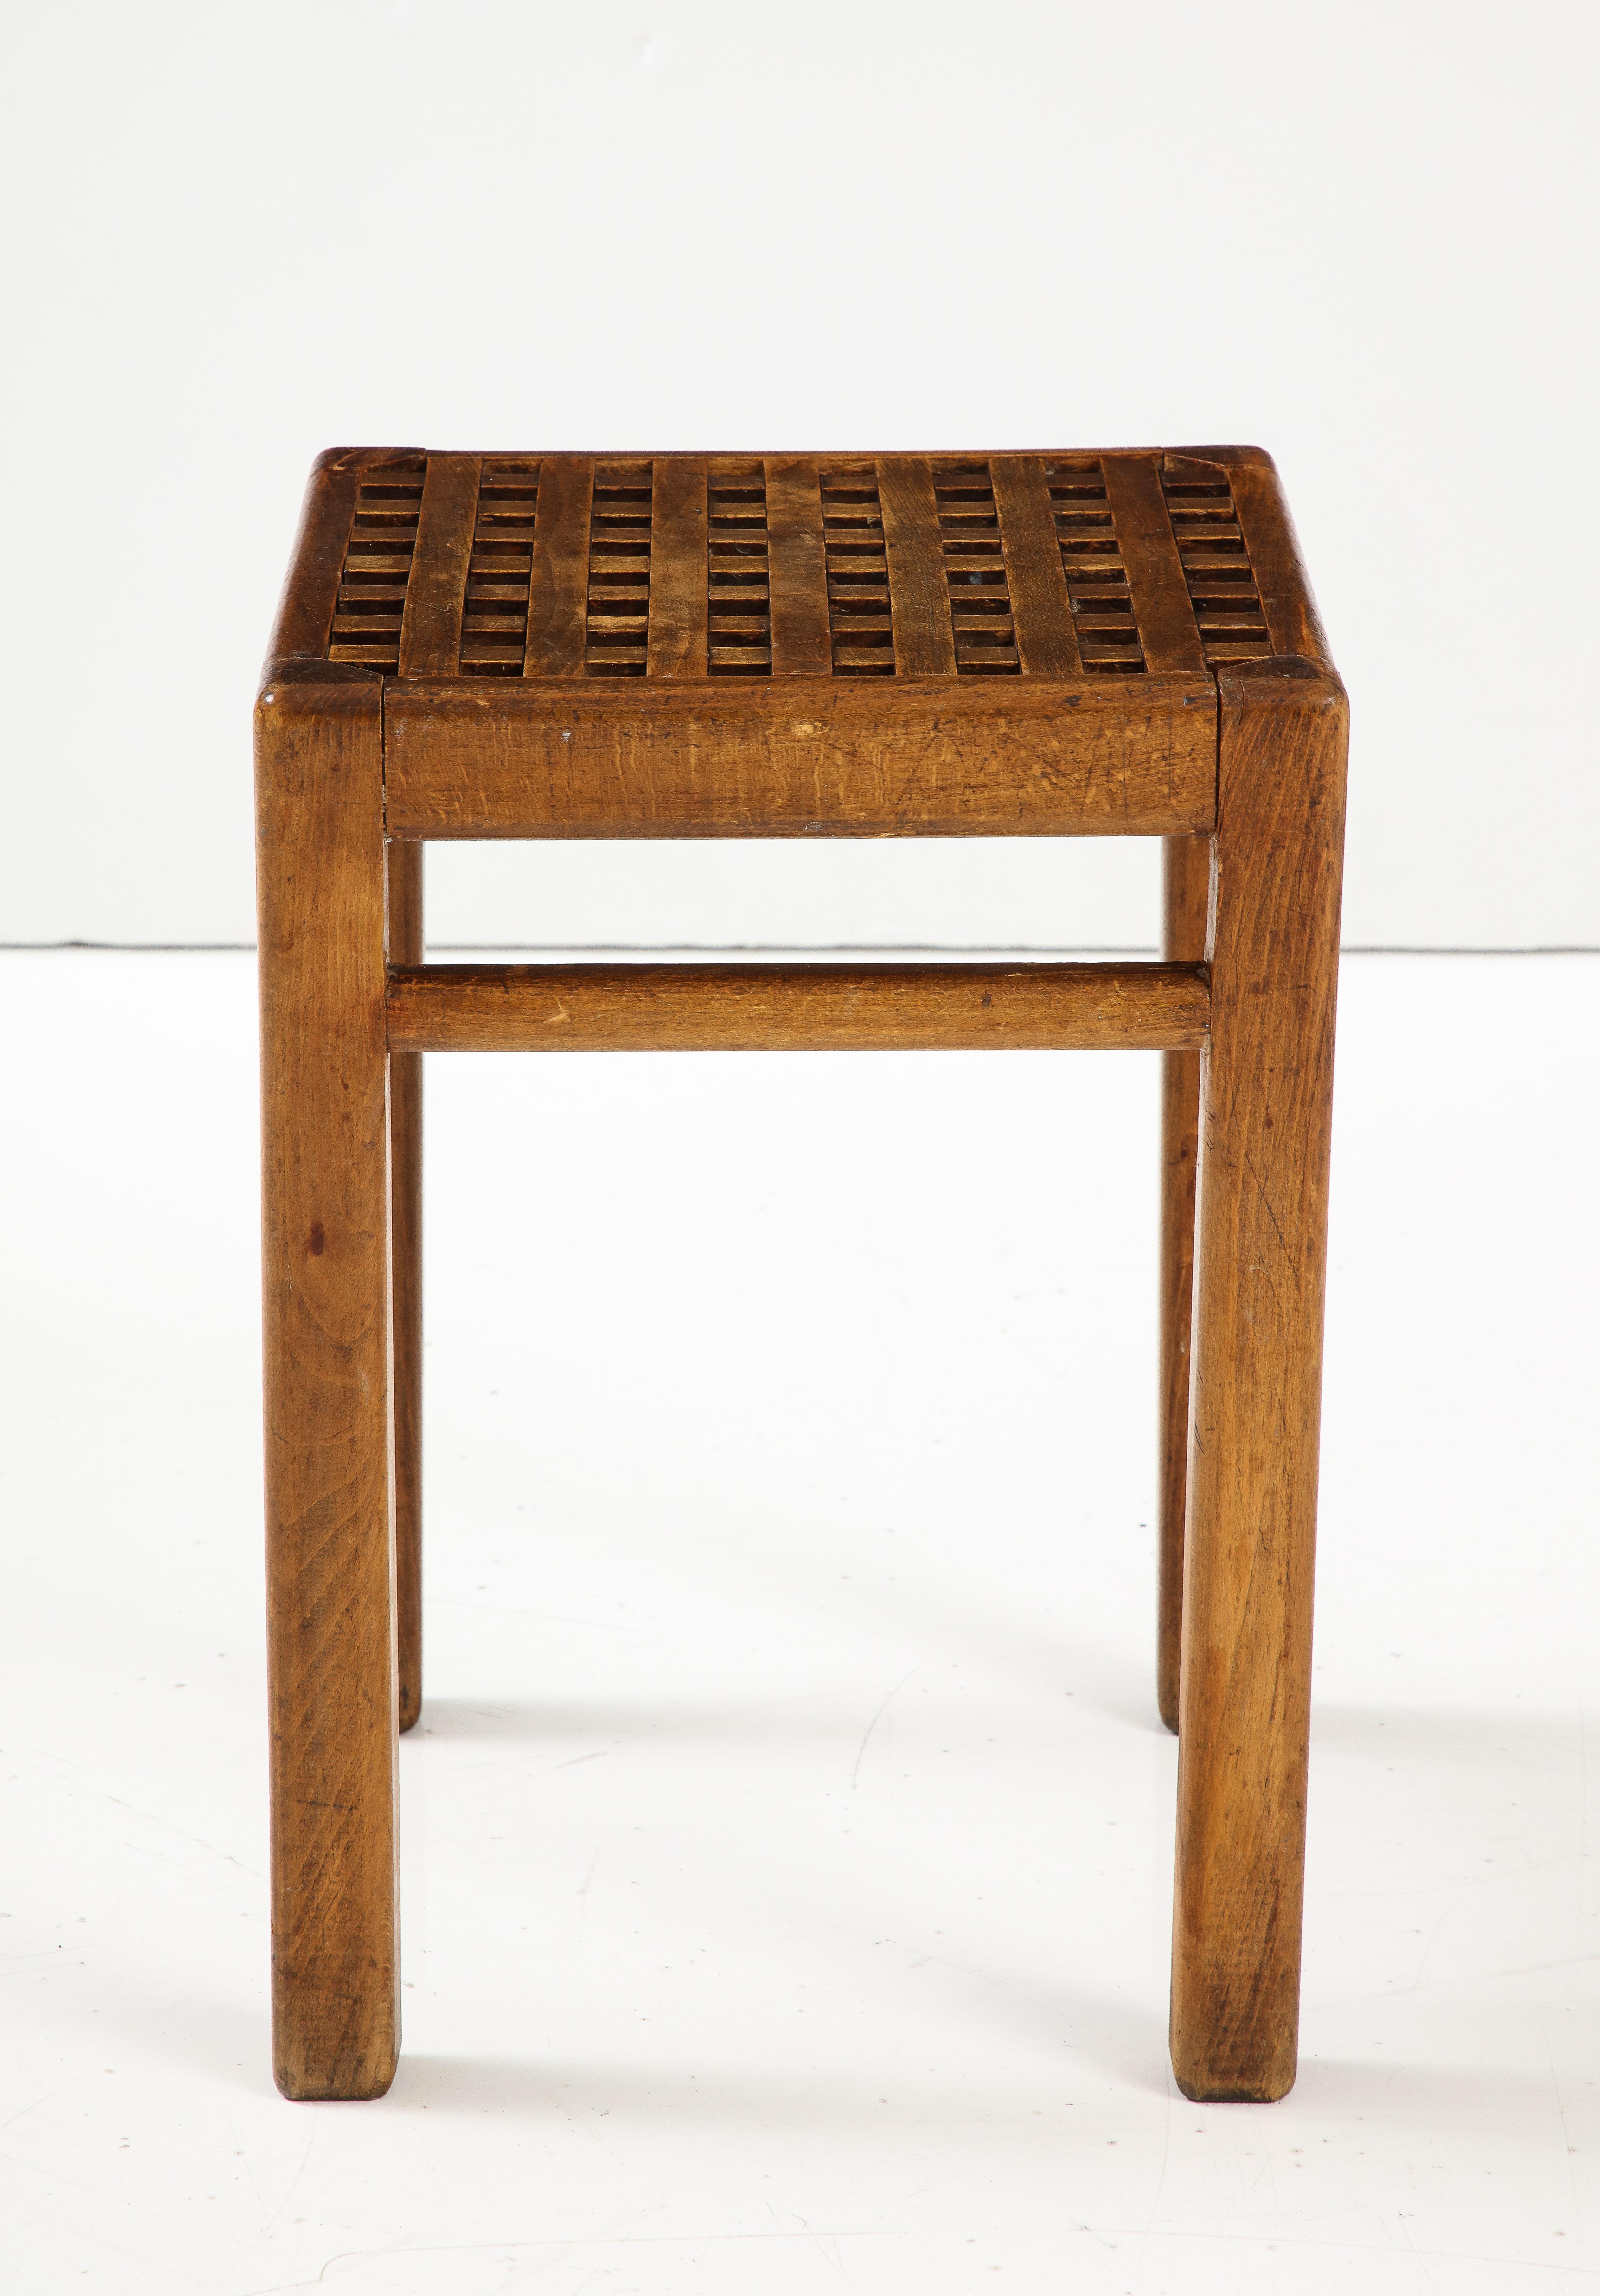 René Gabriel table/stool, France, c. 1940.